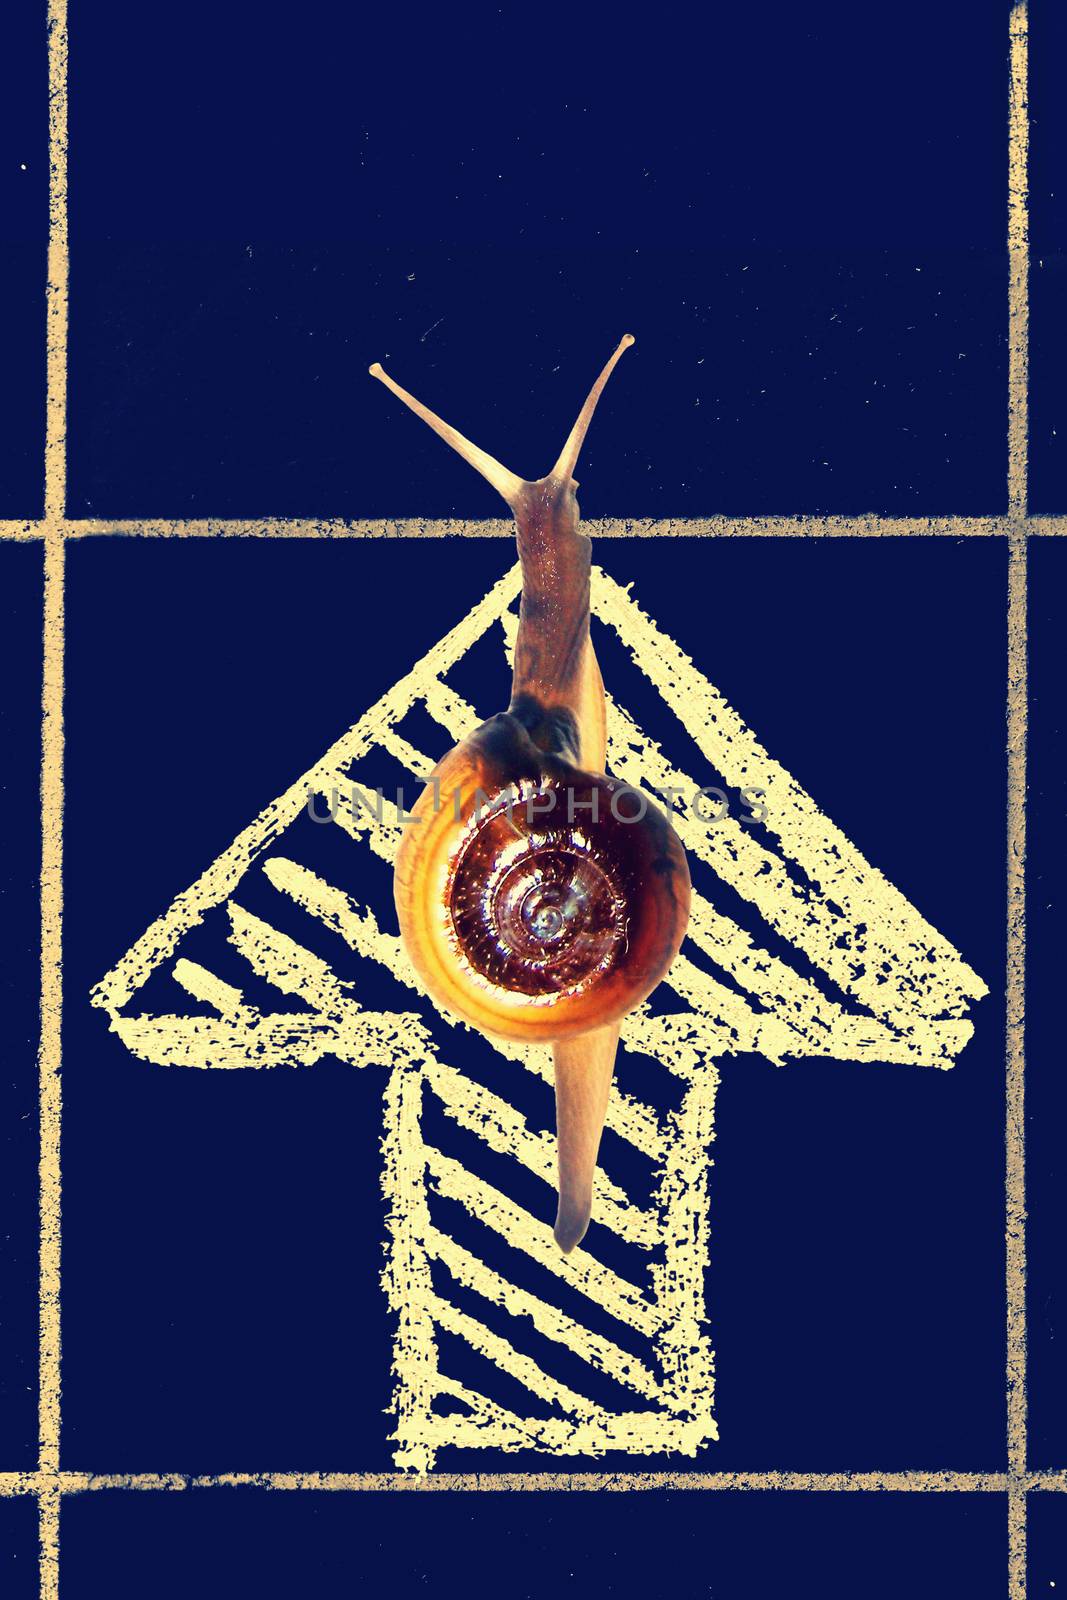 Snail Going towards the goal